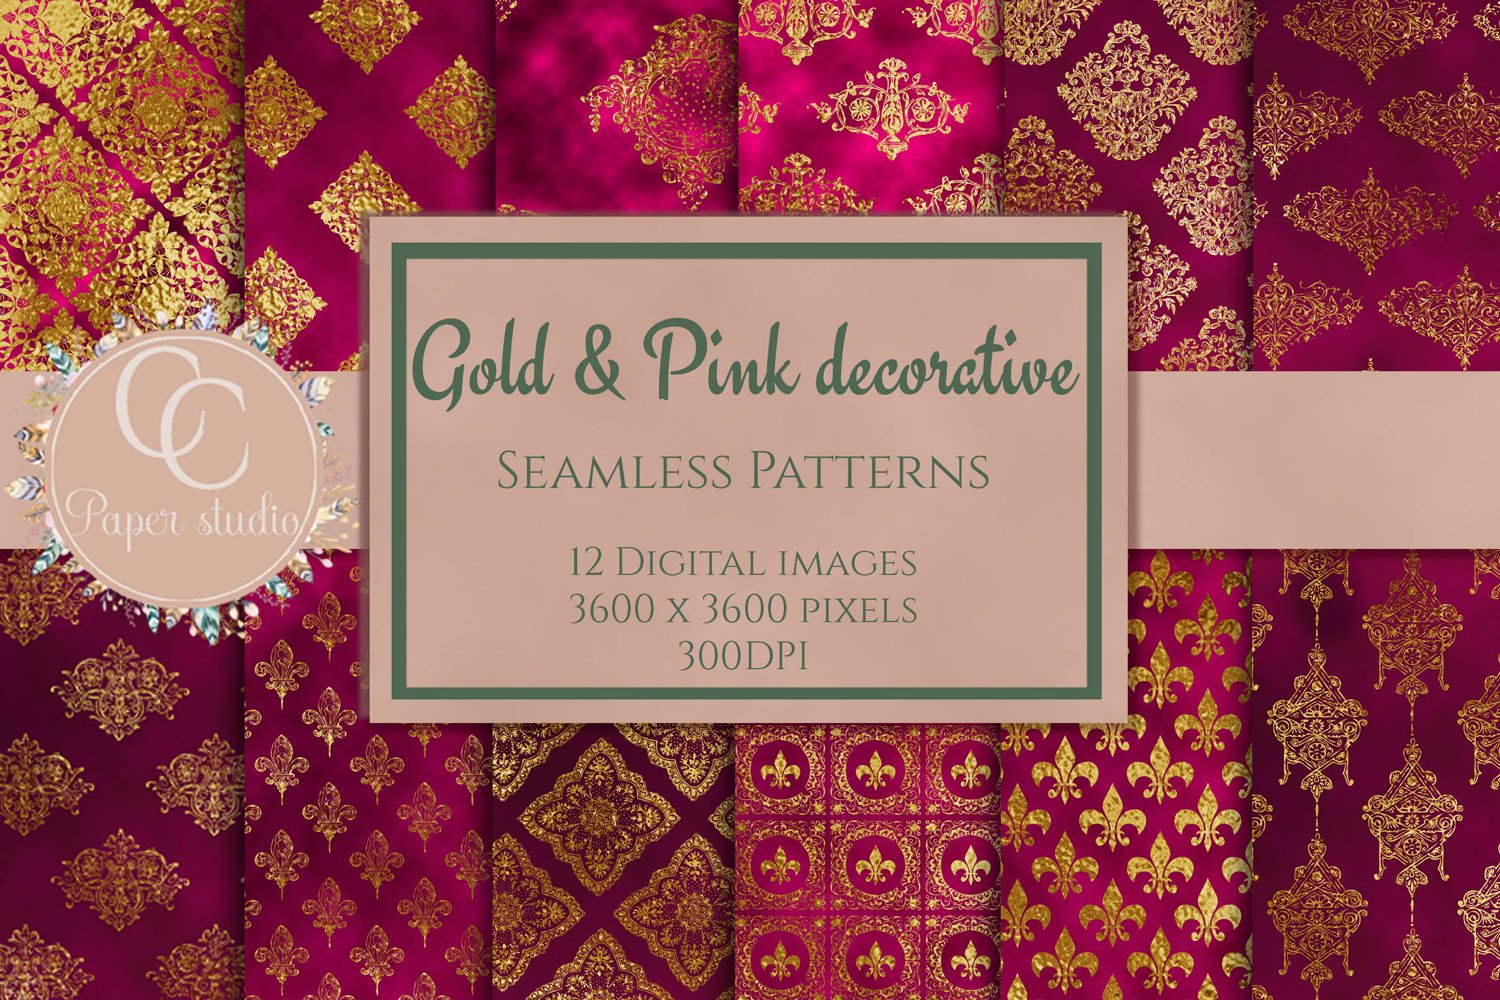 Gold & Pink Decorative Seamless Patterns.